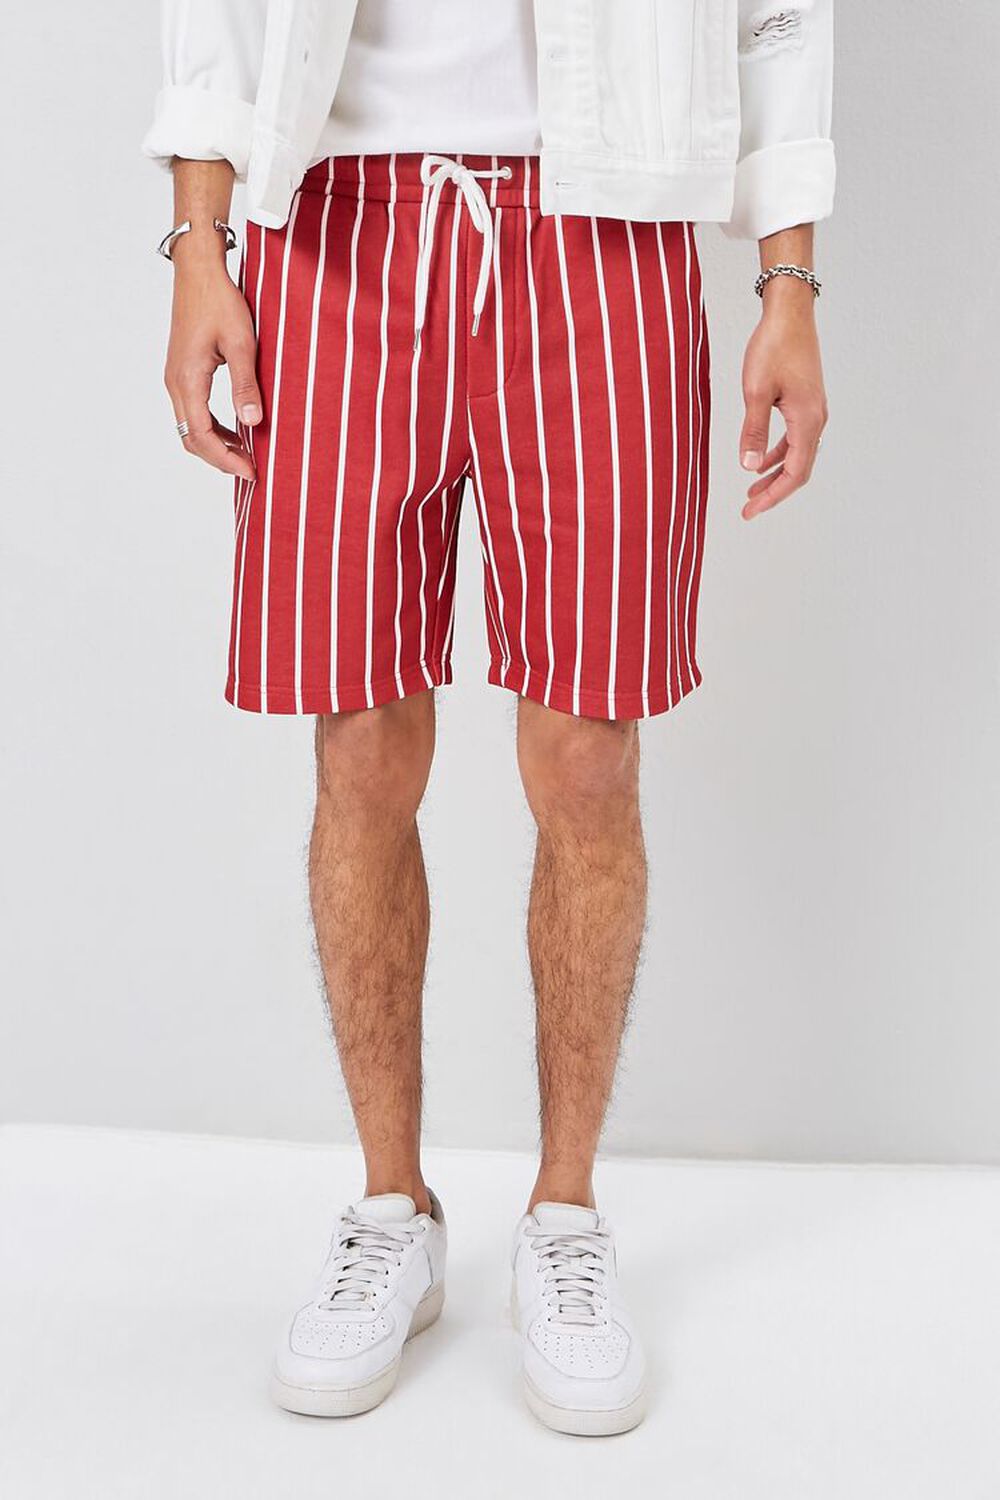 RED/WHITE Pinstriped Drawstring Shorts, image 2